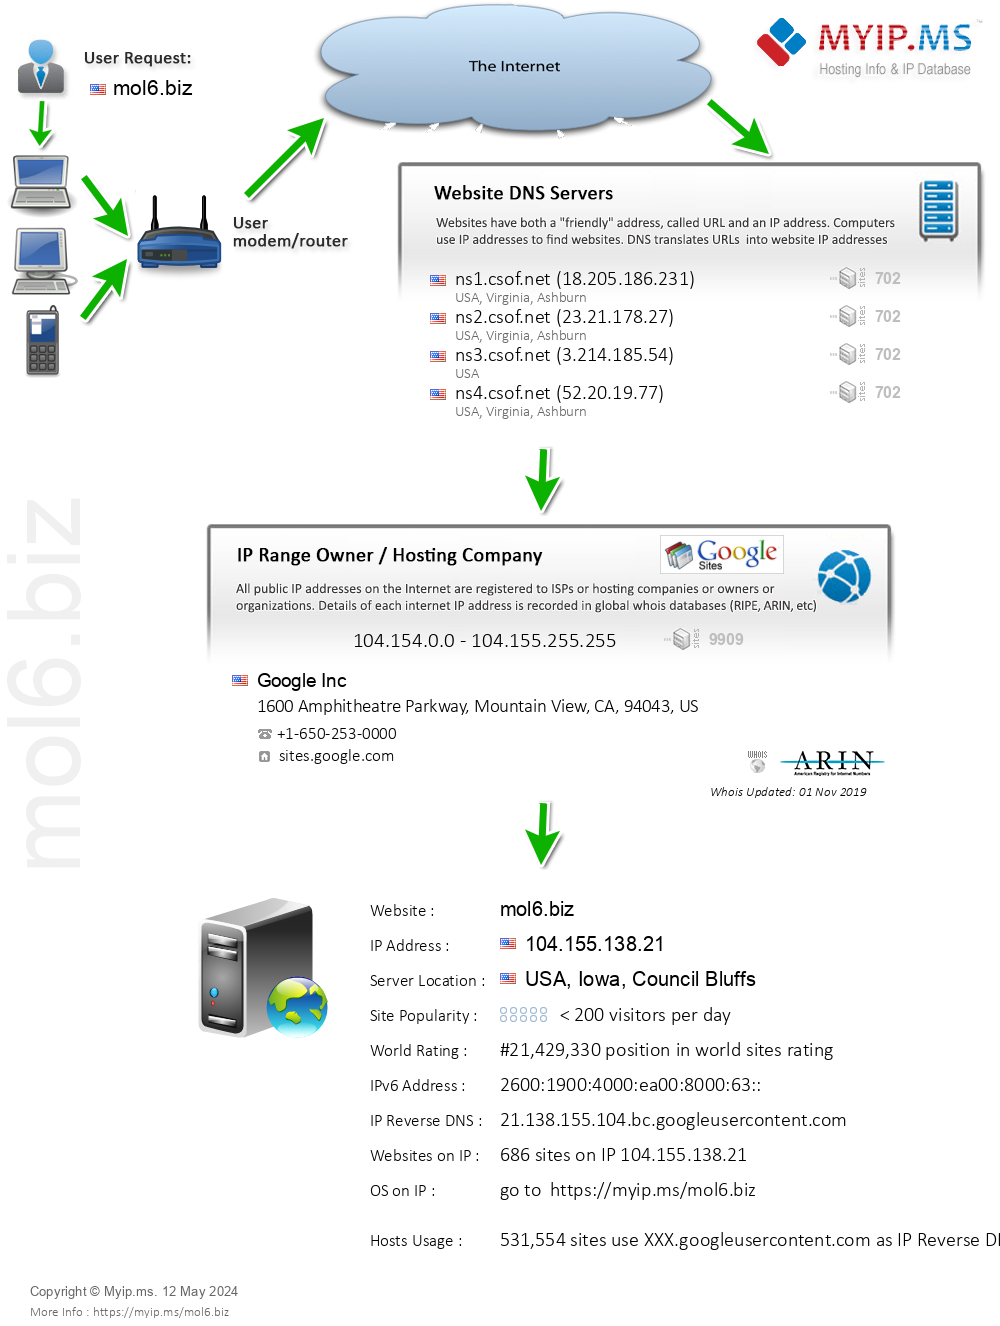 Mol6.biz - Website Hosting Visual IP Diagram